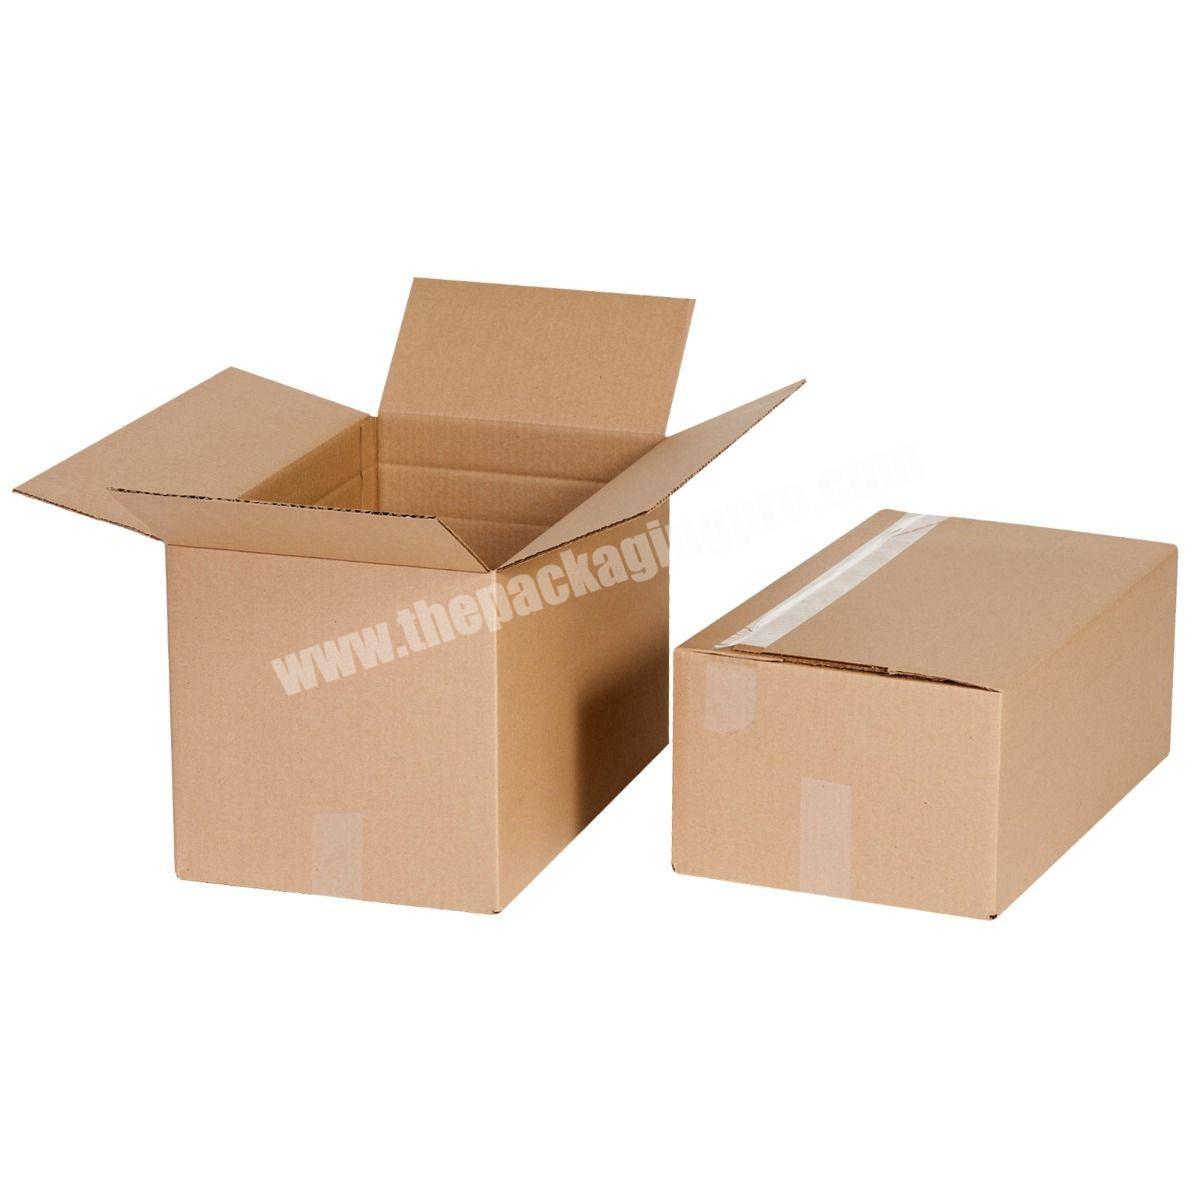 Plastic Boxes, Corrugated Plastic Boxes in Stock - ULINE